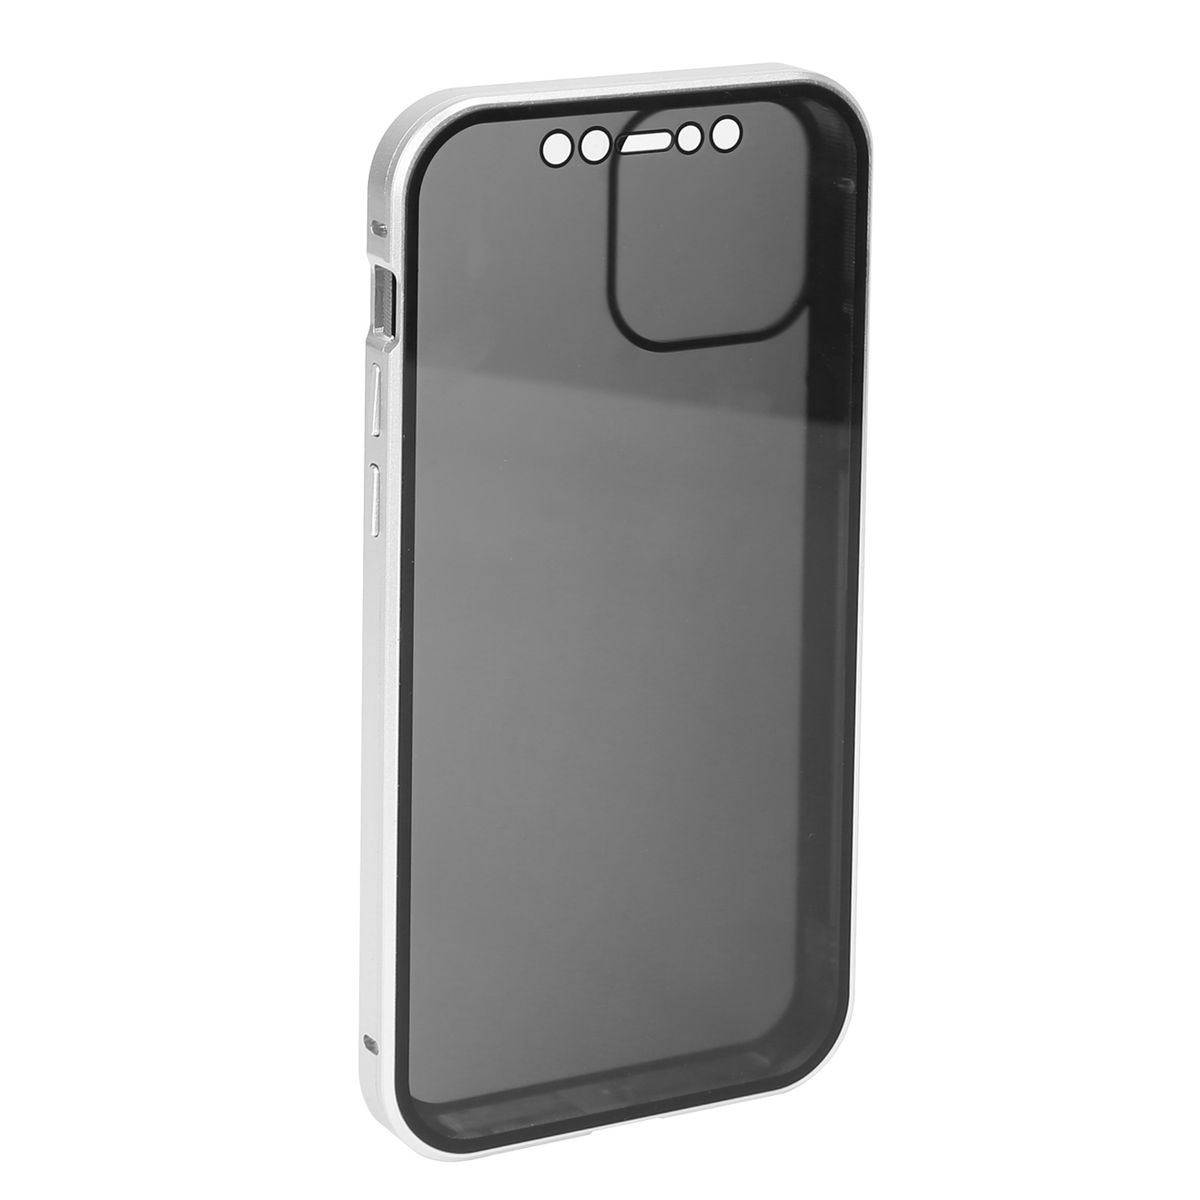 Photos - Case iMounTEK ® Privacy iPhone  - iPhone 12 Pro Max - Silver PACASE 